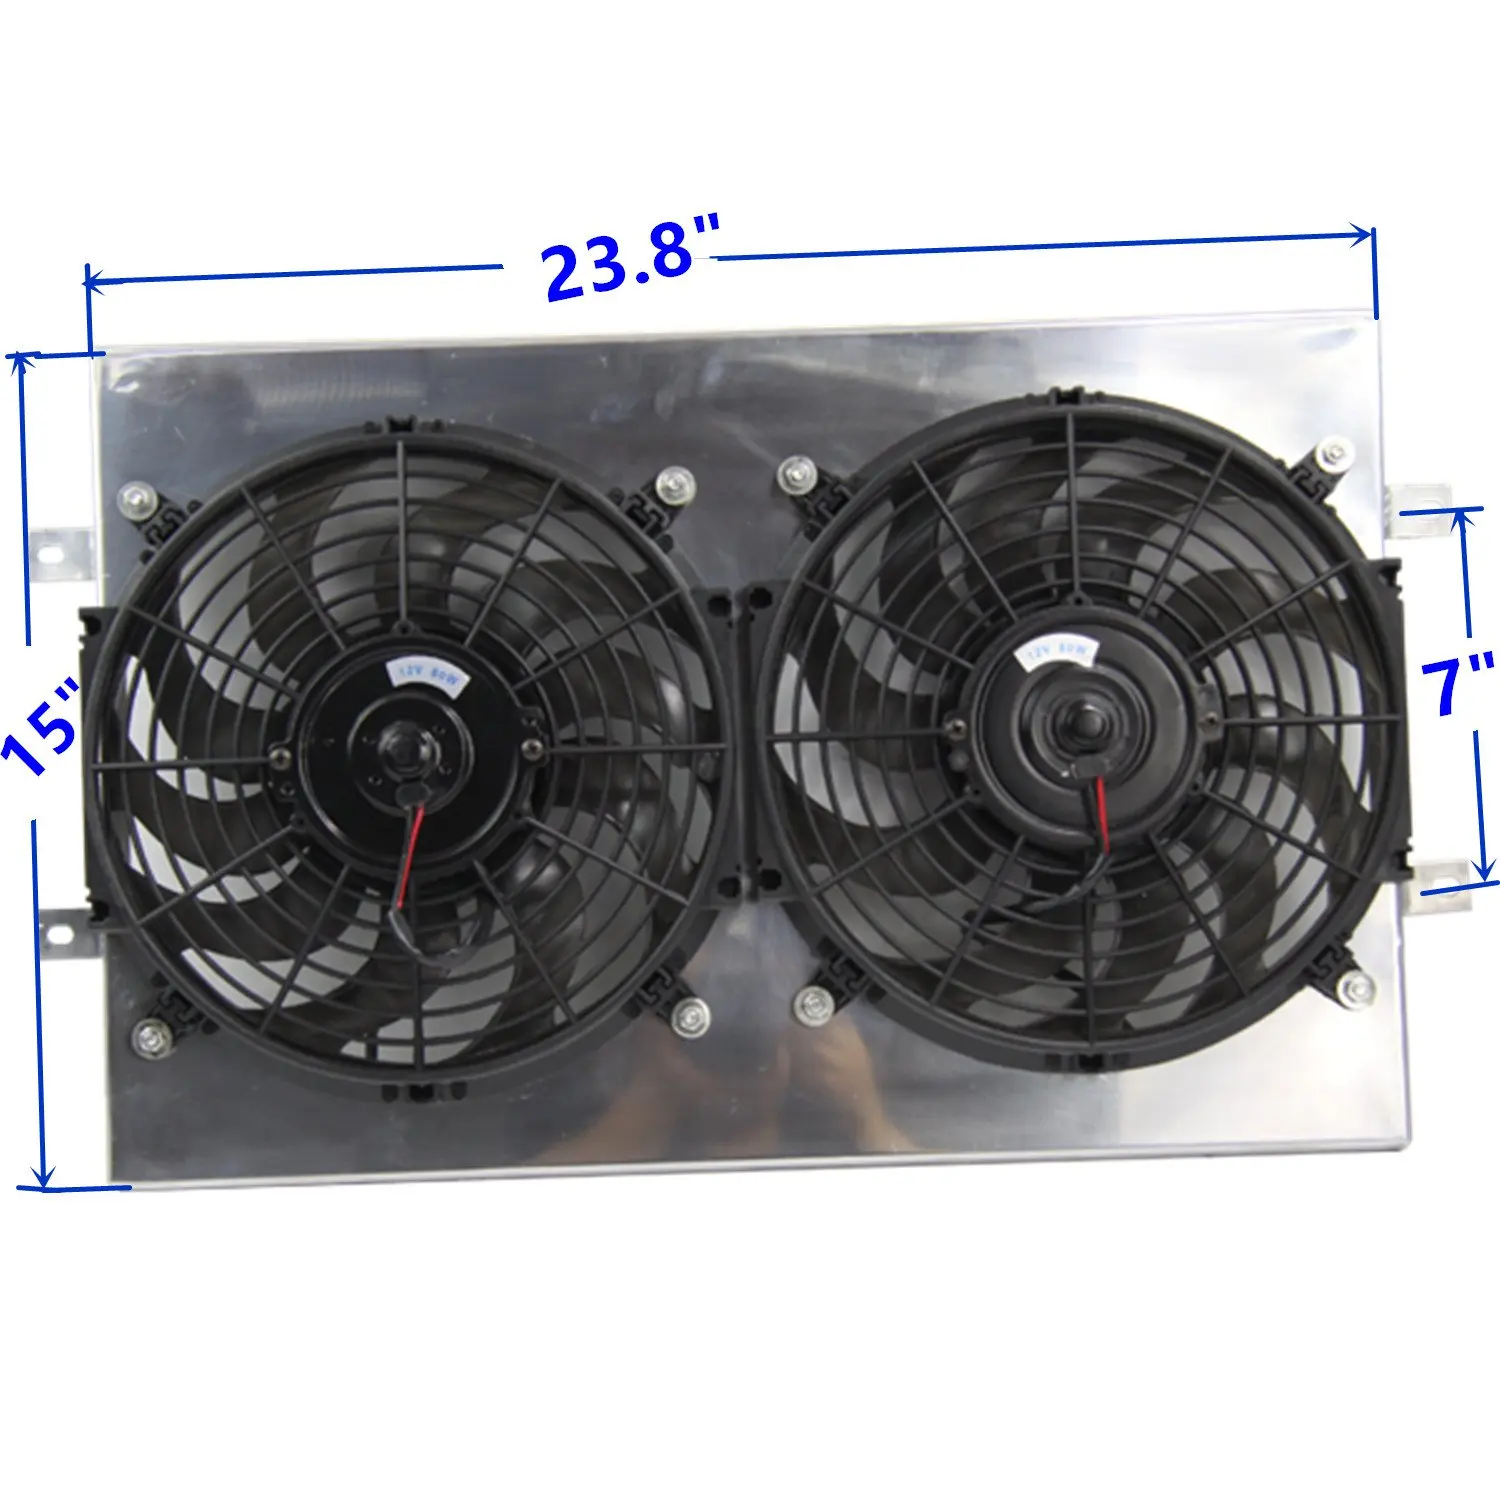 isis radiator fan shroud kit